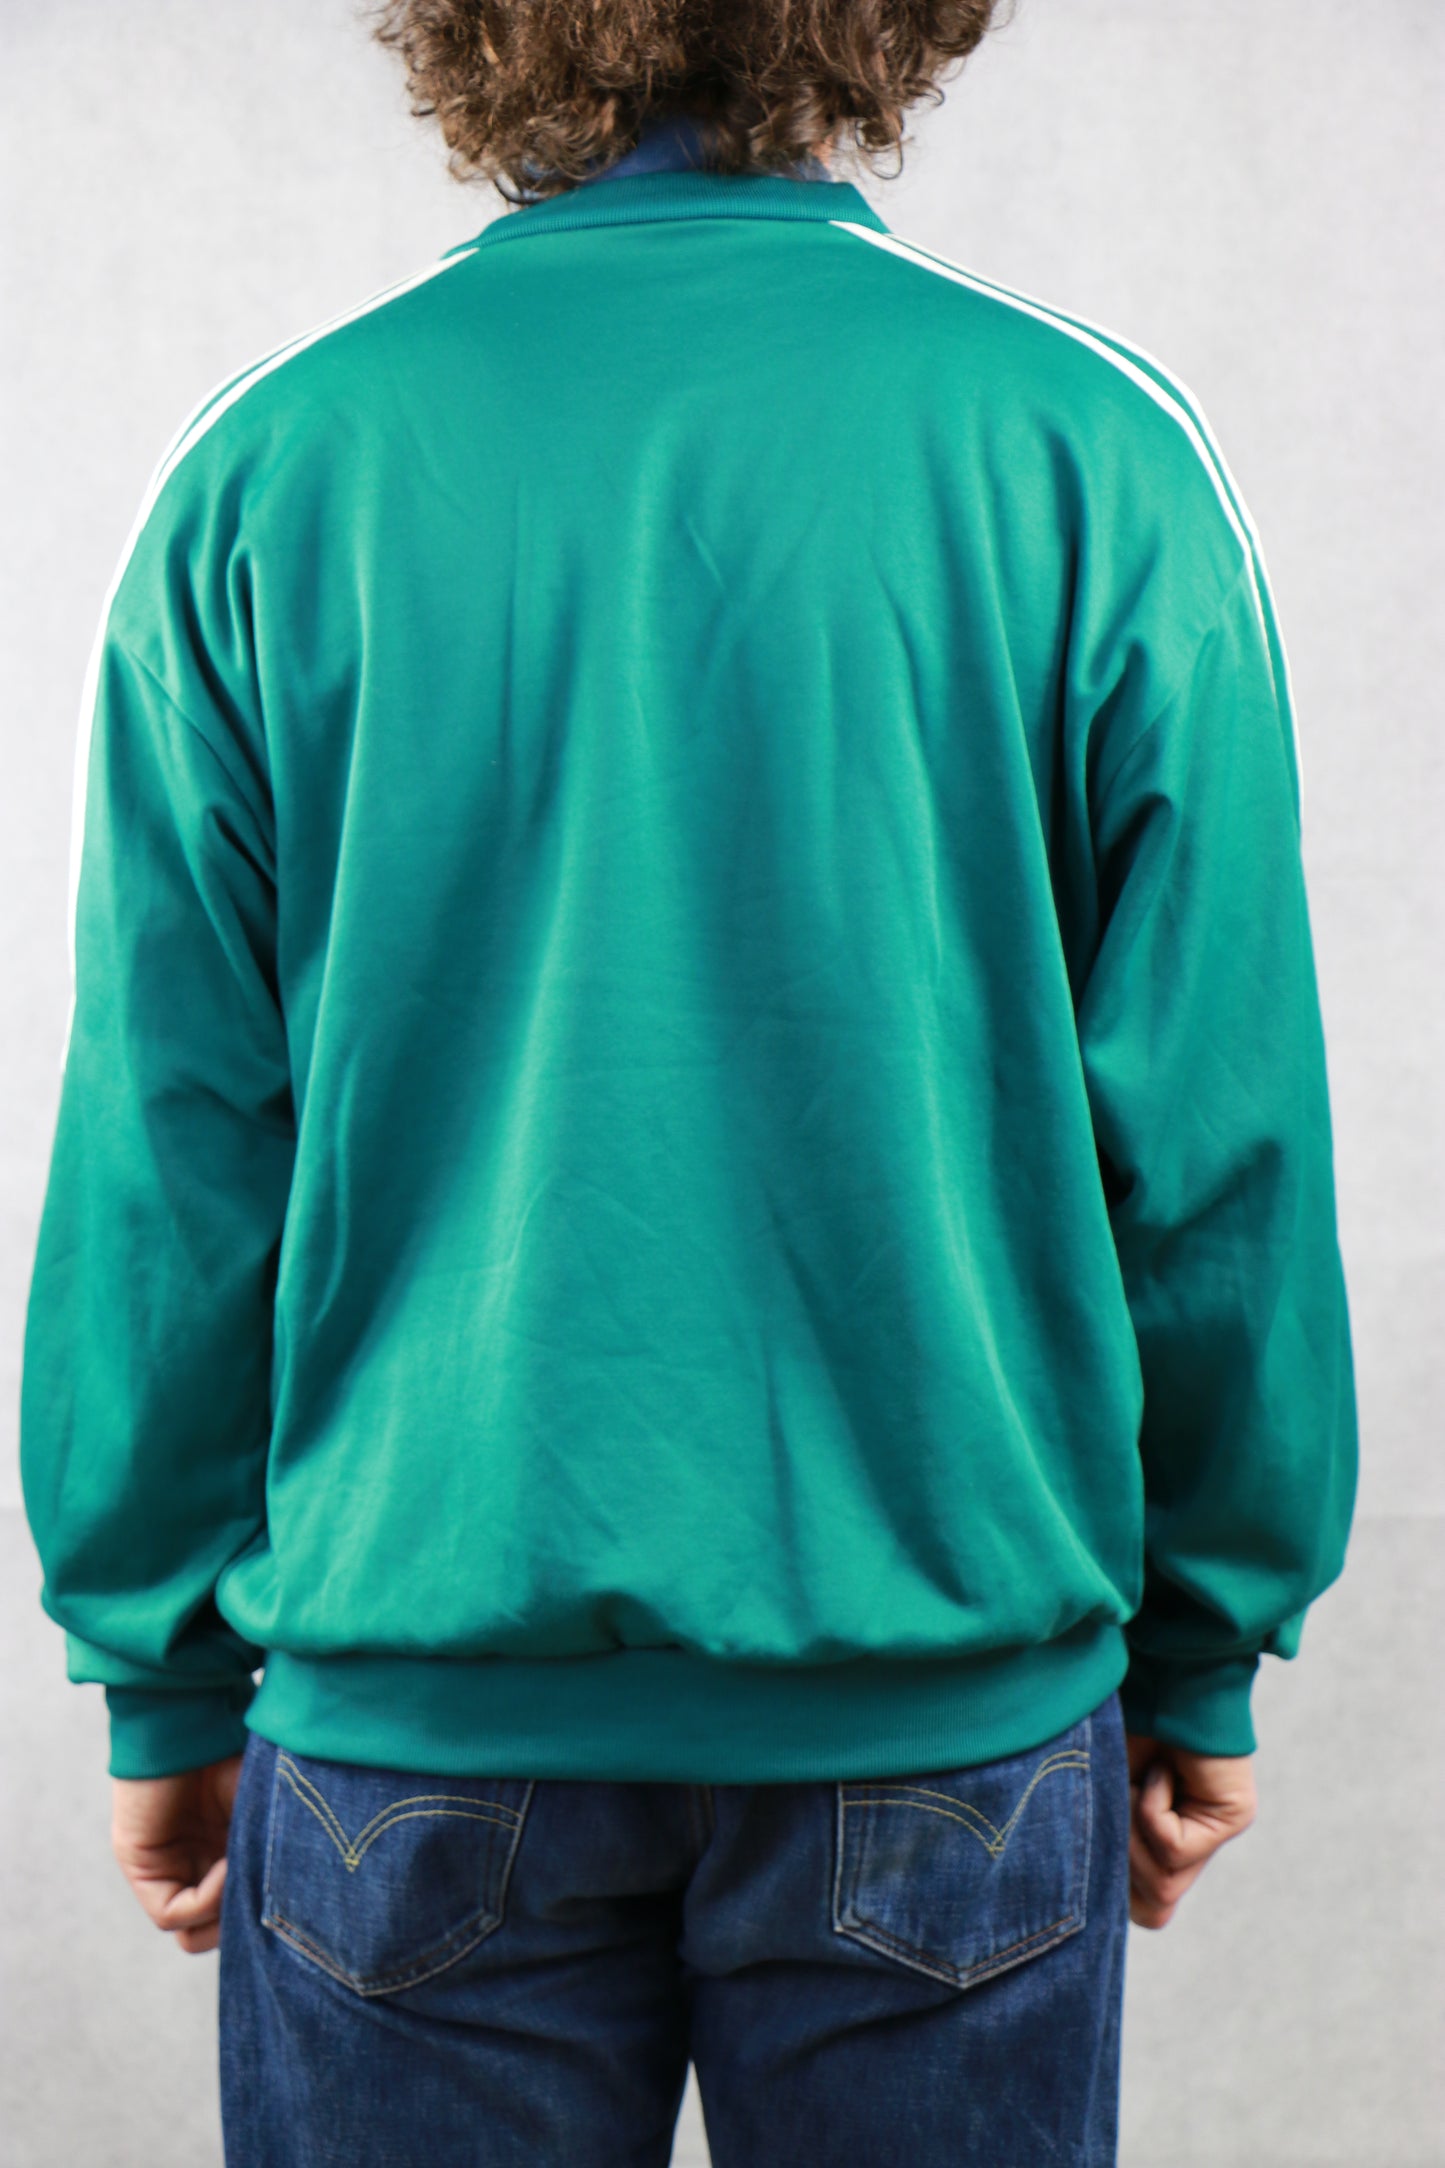 Adidas Sweatshirt - vintage clothing clochard92.com